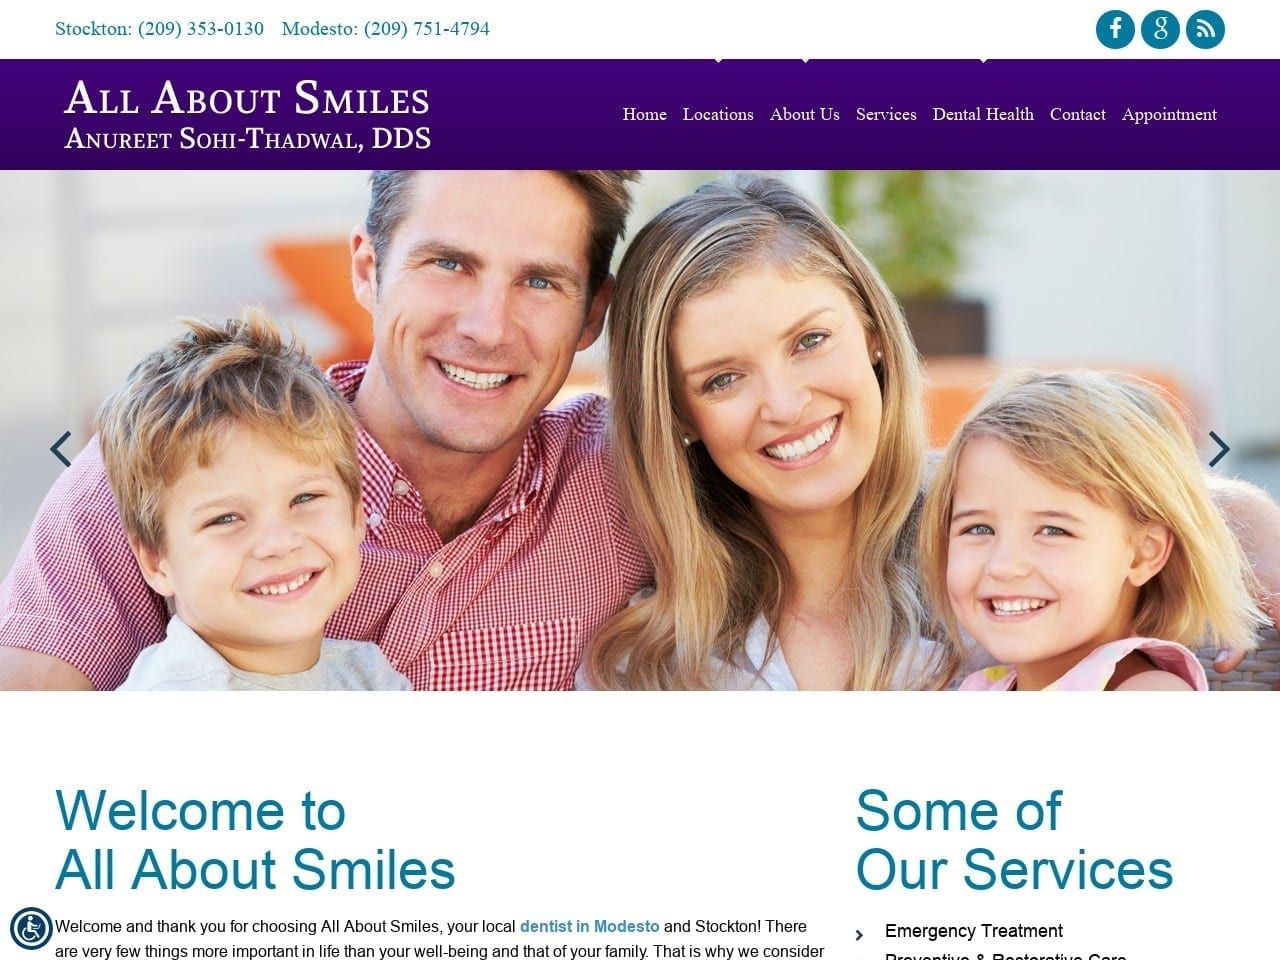 Al Labout Smilesca Website Screenshot from allaboutsmilesca.com